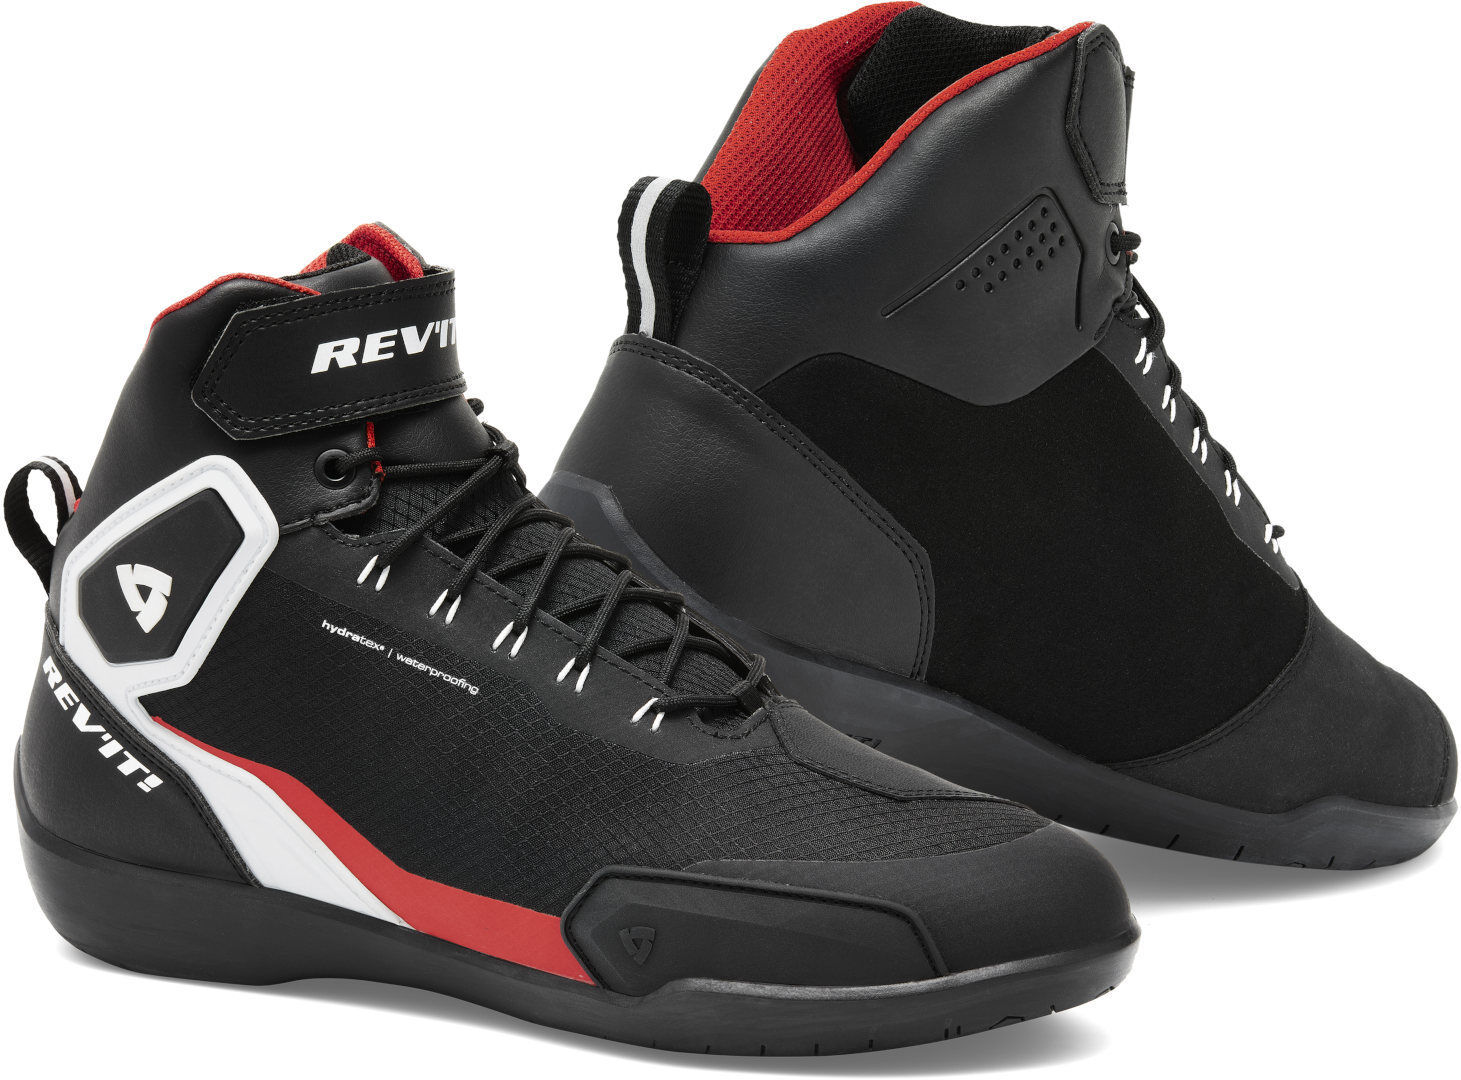 Revit G-Force H2O Zapatos impermeables para motocicletas - Negro Blanco Rojo (39)